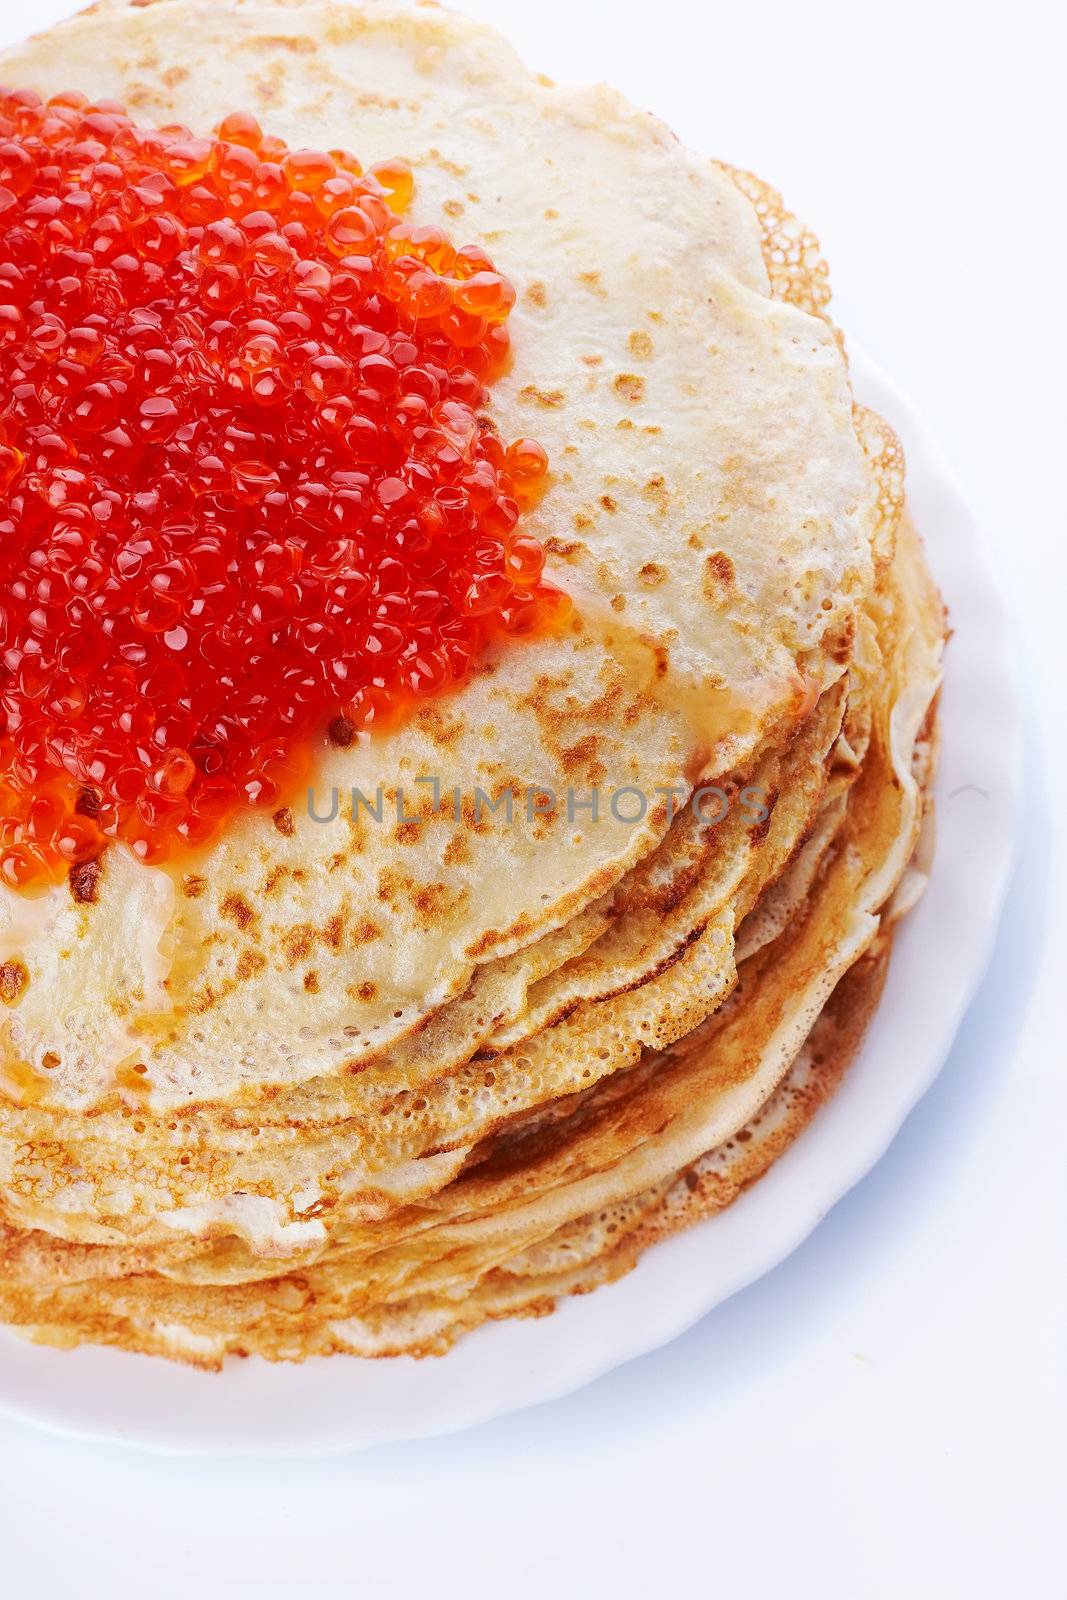 Pancakes with red caviar. Pile of pancakes. Pancakes on a plate. Red caviar.